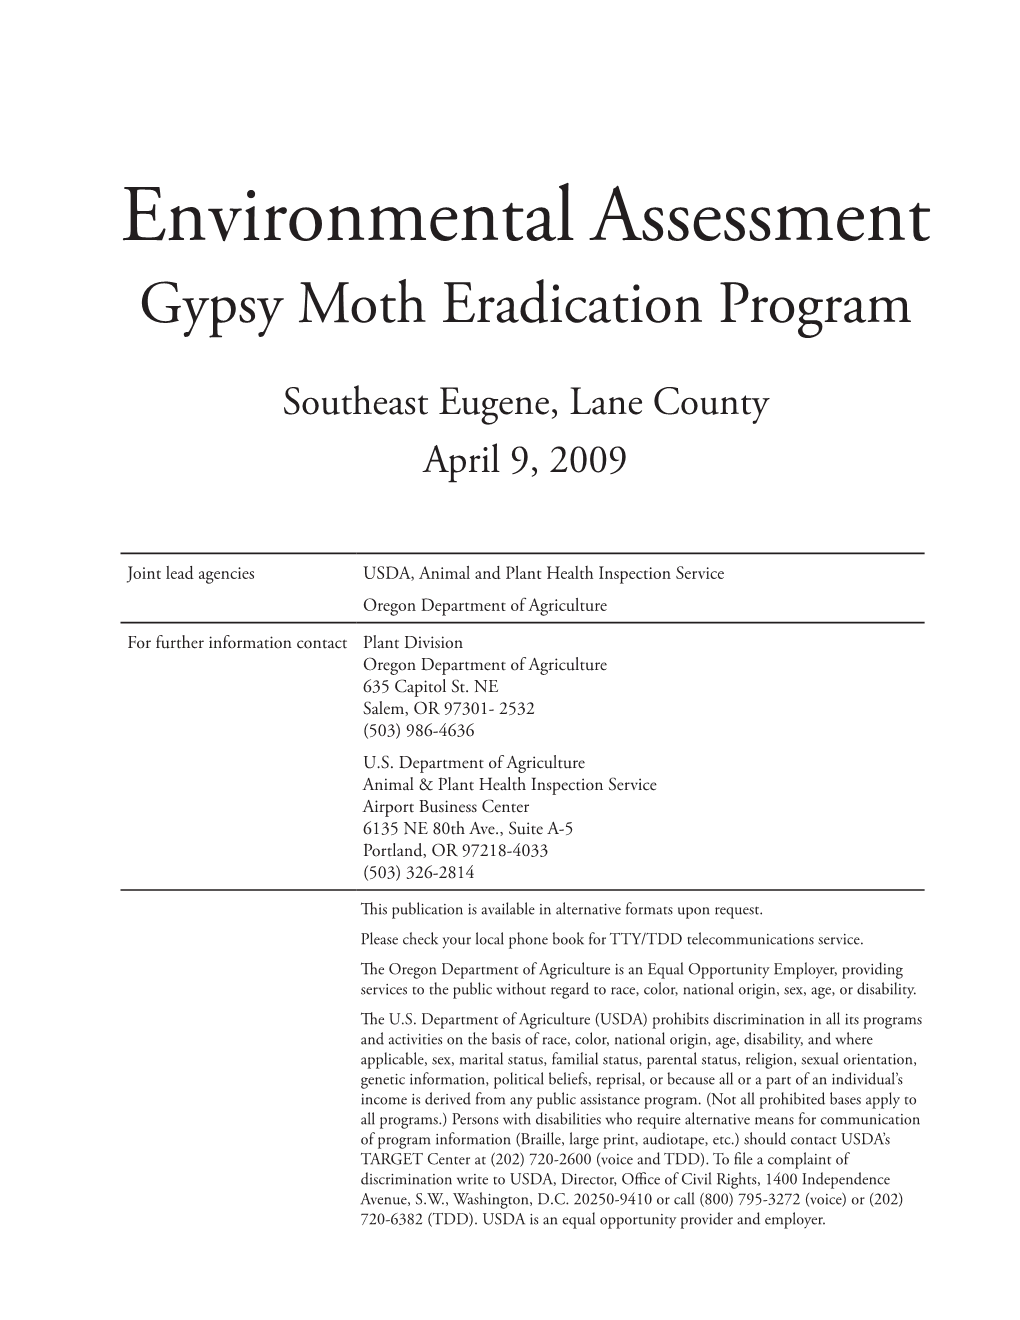 Environmental Assessment, Gypsy Moth Eradication Program Southeast Eugene, Lane County, USDA-Animal and Plant Health Inspection